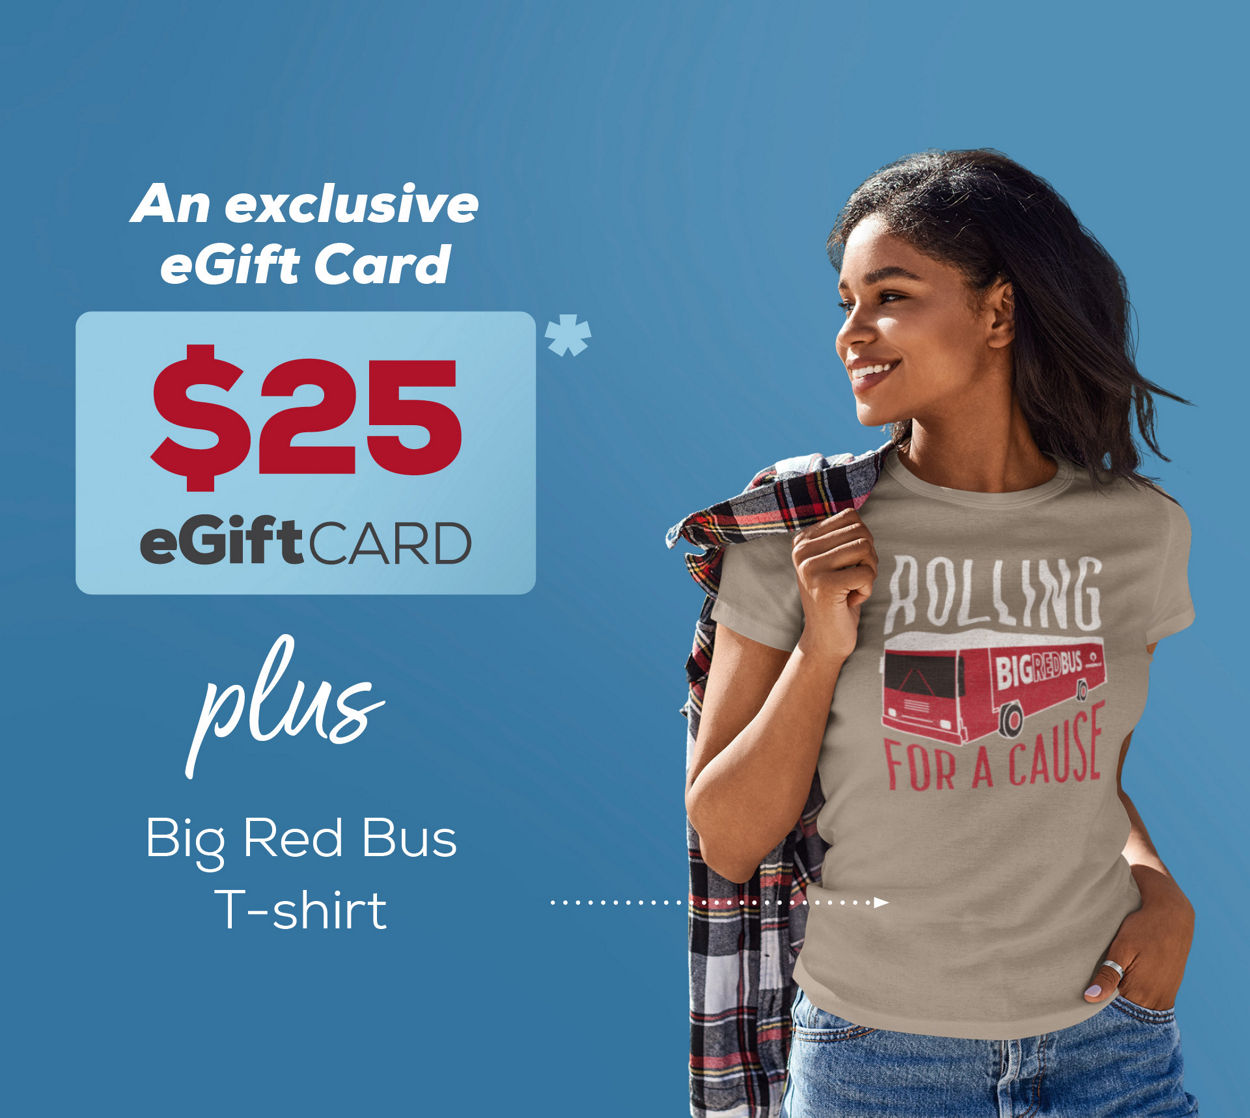 $25 exclusive eGift card plus a Big Red Bus T-shirt